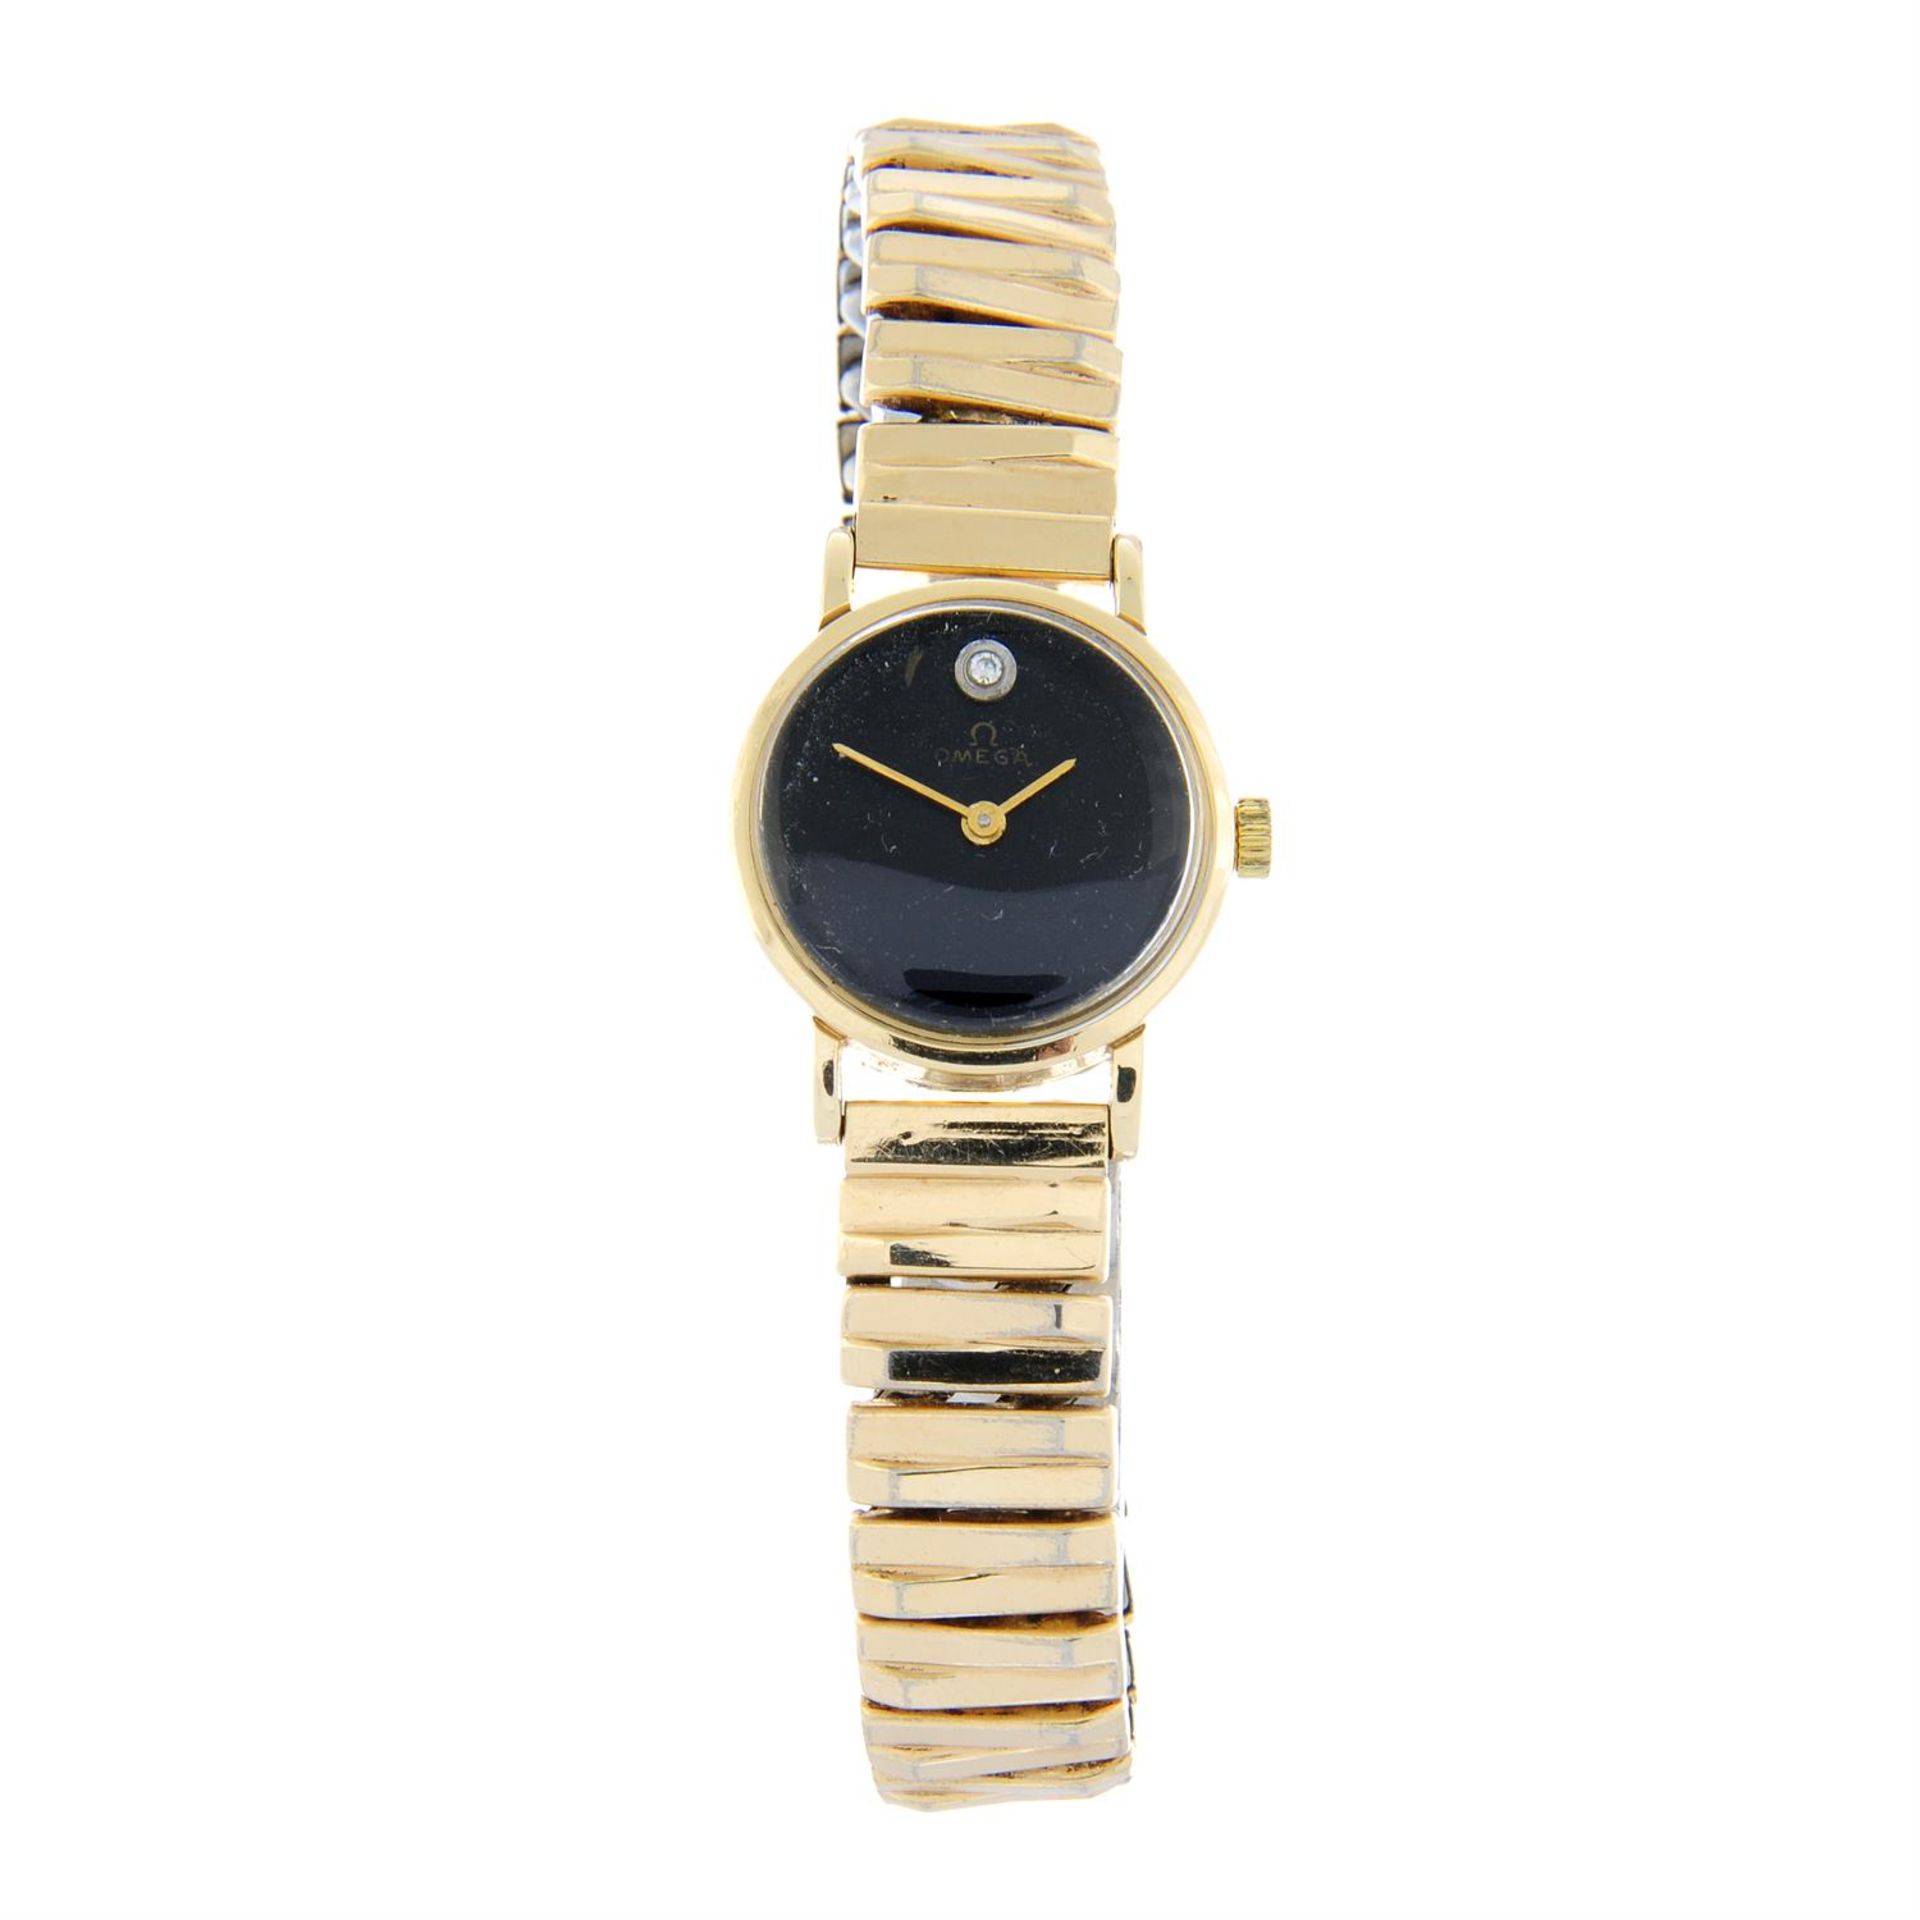 OMEGA - a yellow metal bracelet watch, 20mm